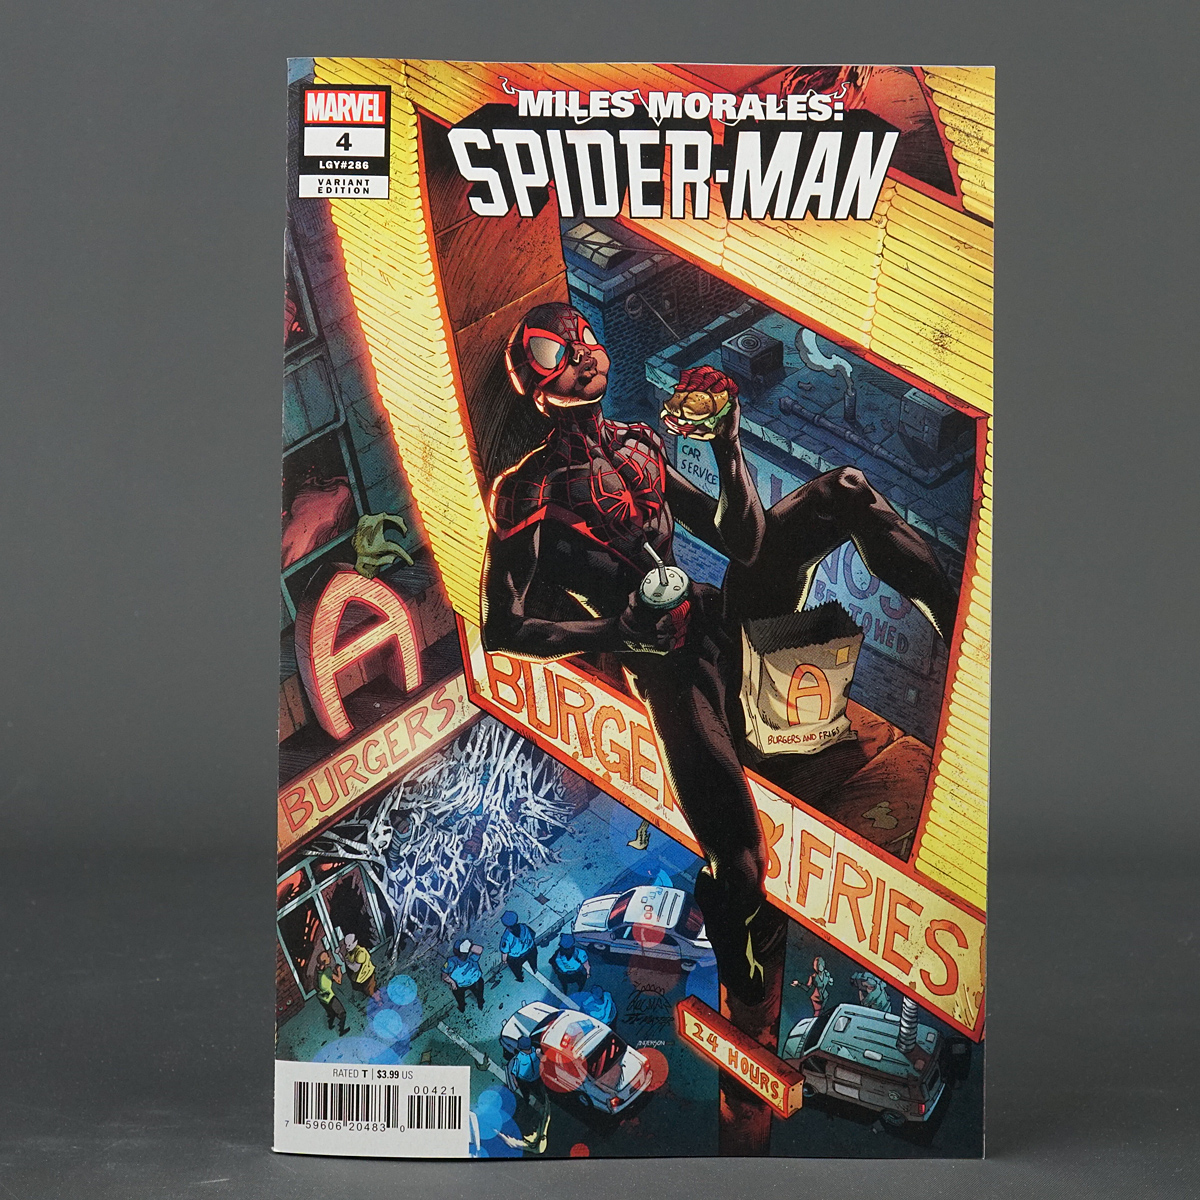 MILES MORALES SPIDER-MAN #4 var 1:25 Marvel Comics JAN230863 (CA) Stegman